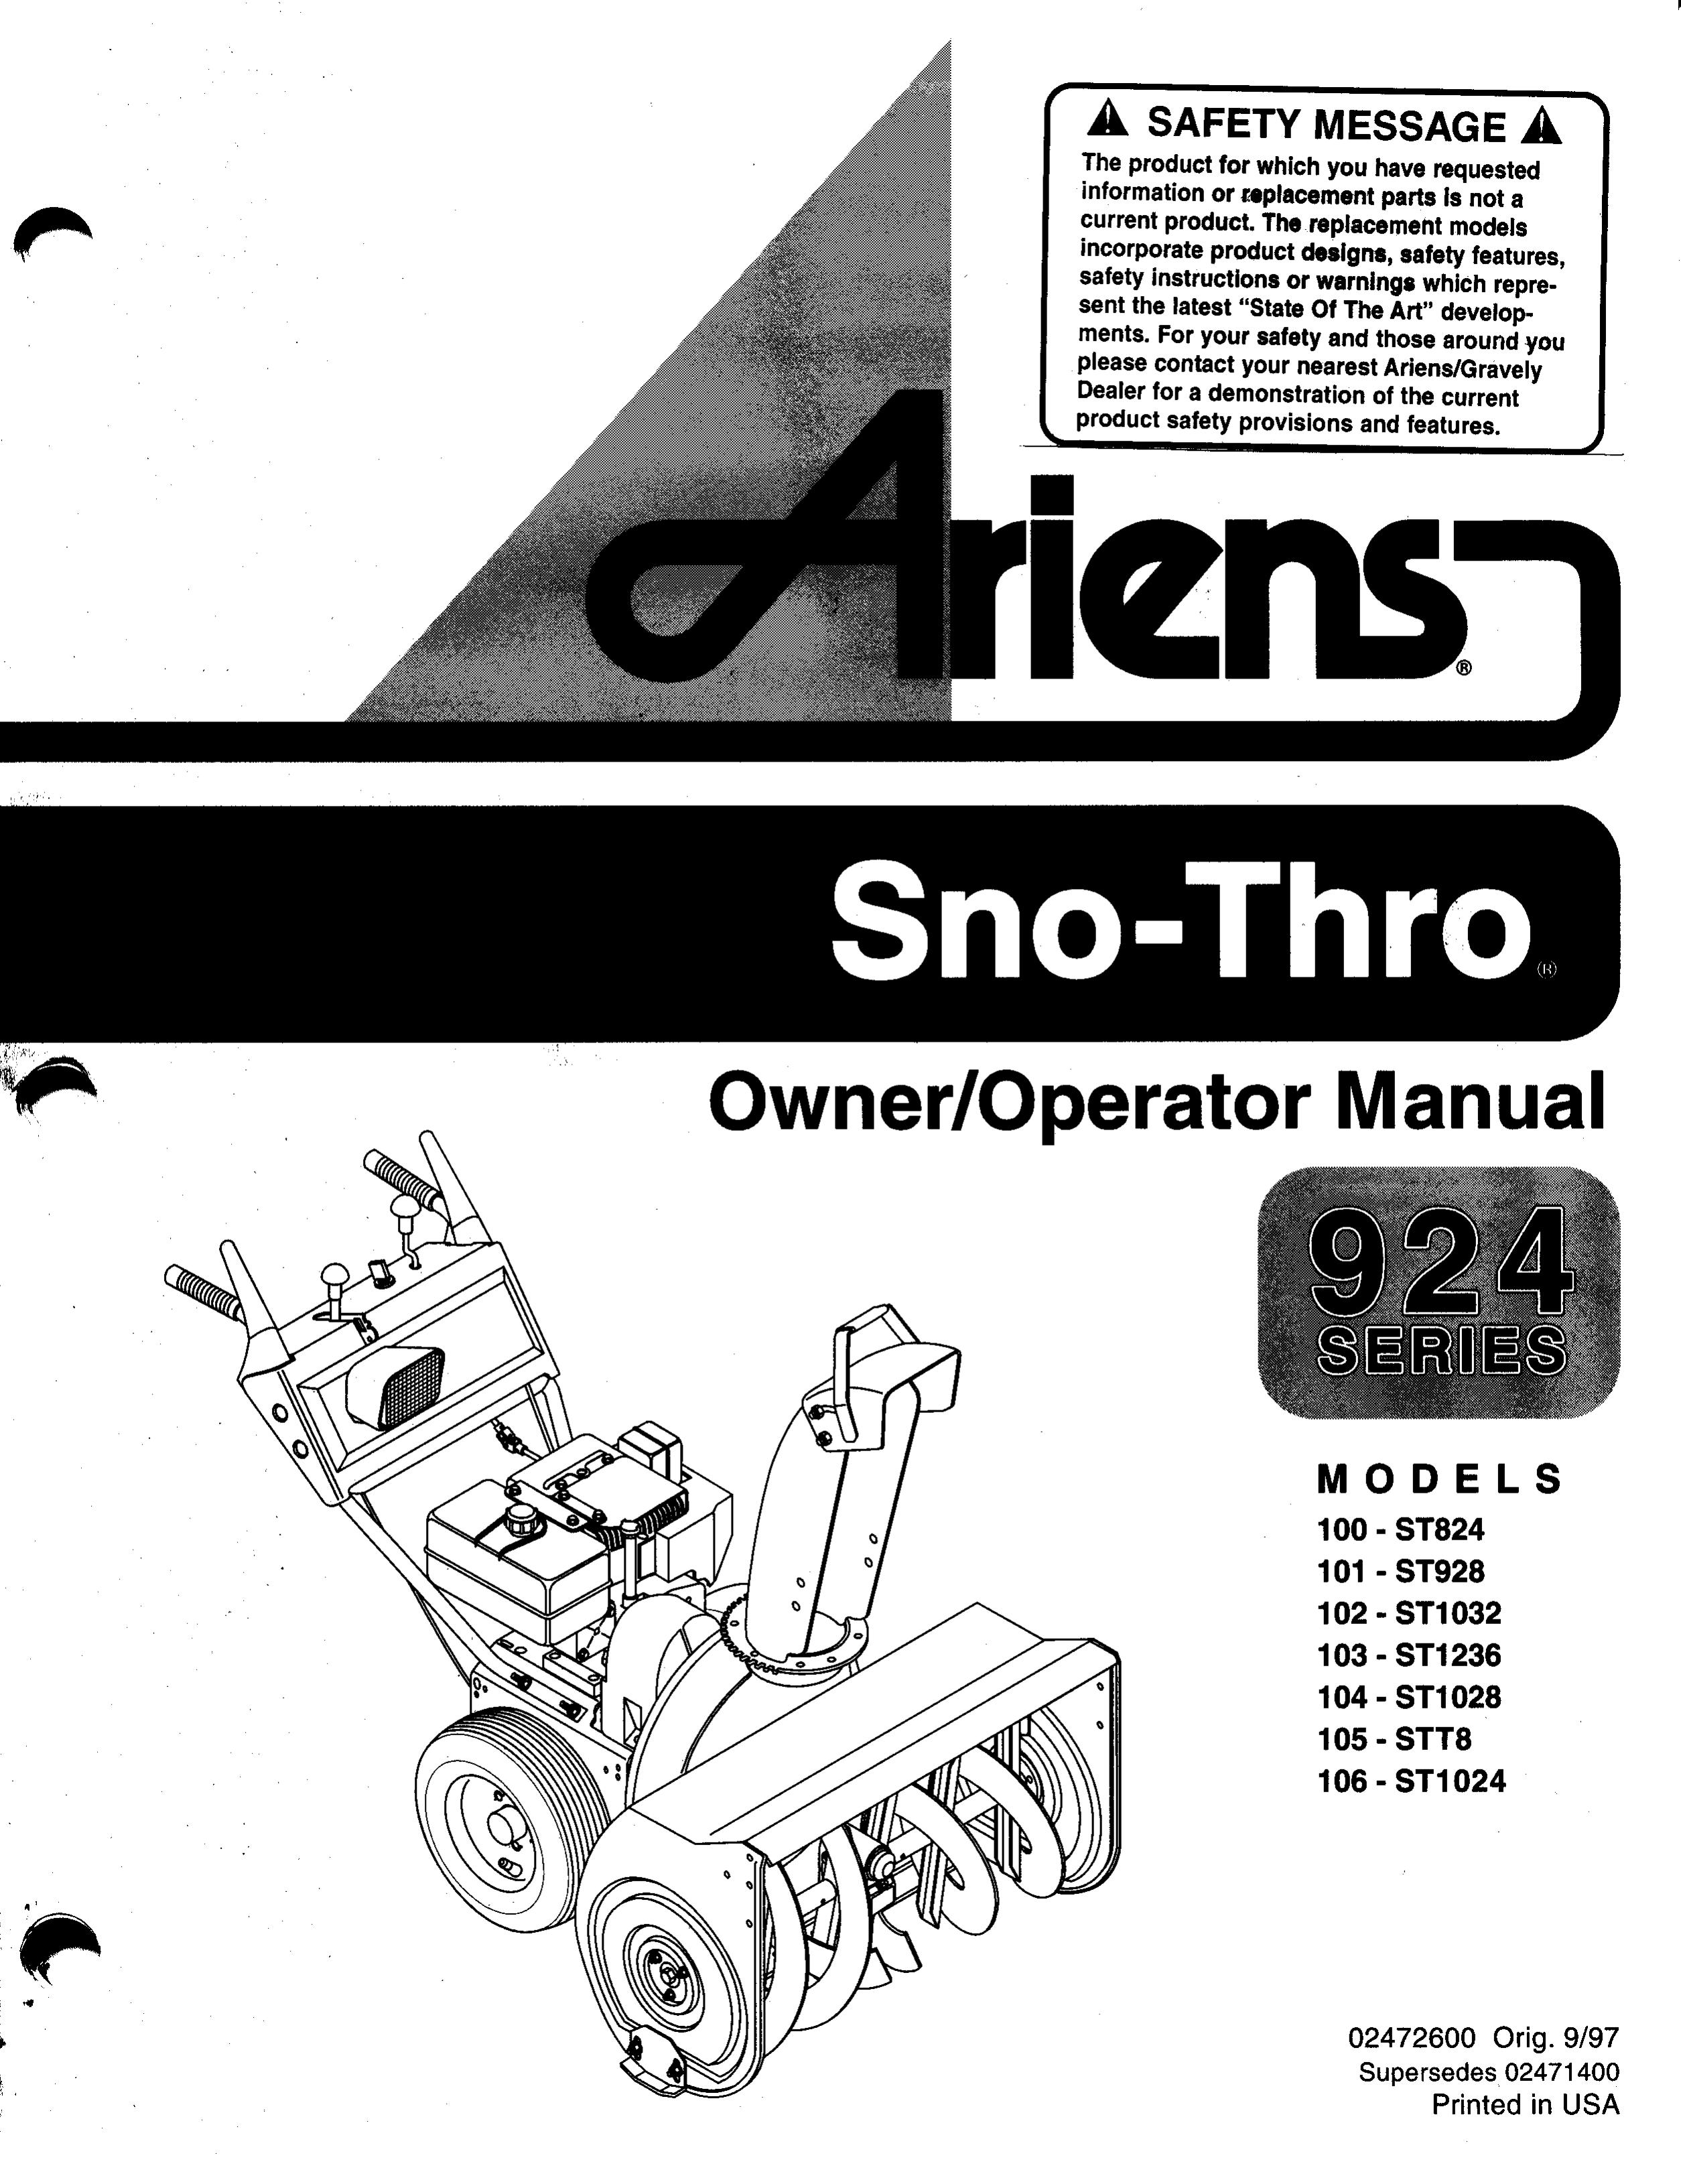 Ariens 104-ST1028 Snow Blower User Manual